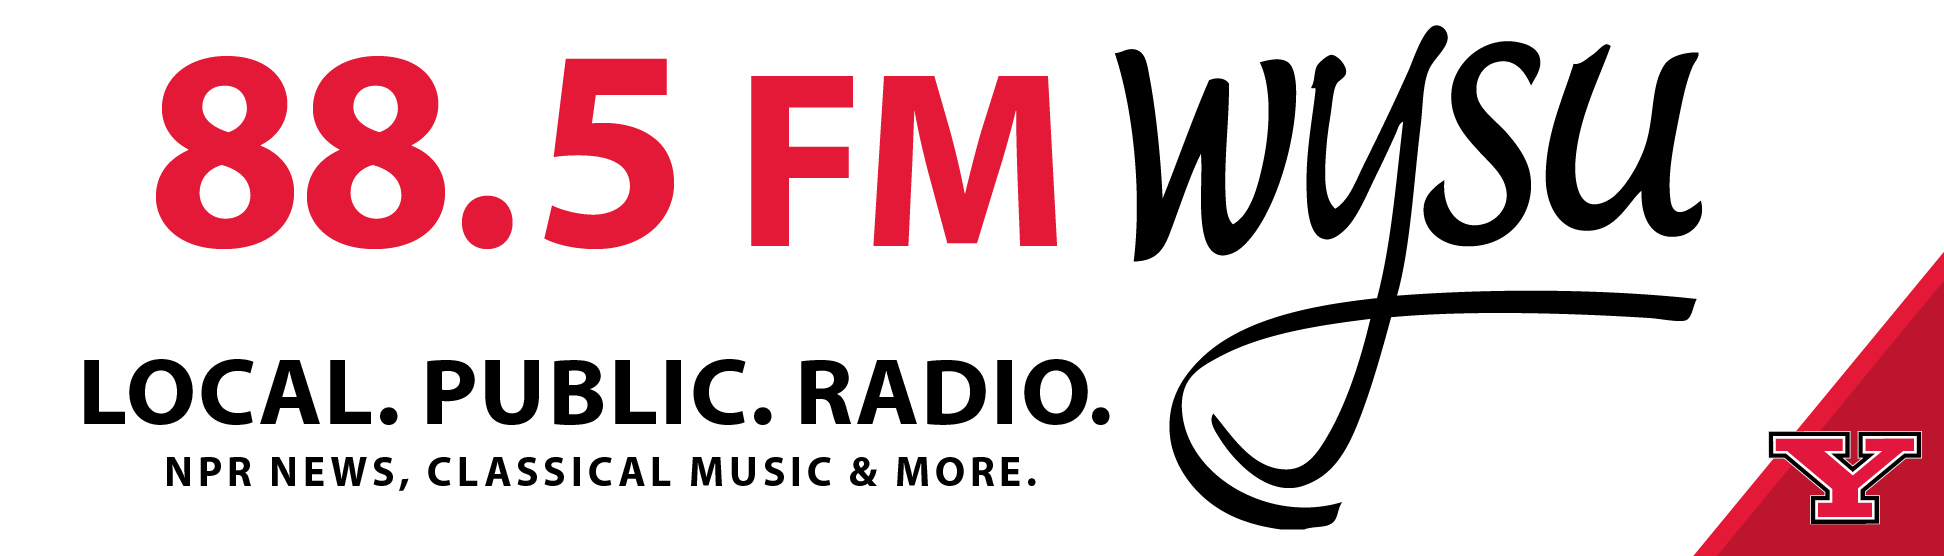 88.5 FM WYSU: Local public radio. NPR news, classical music and more.